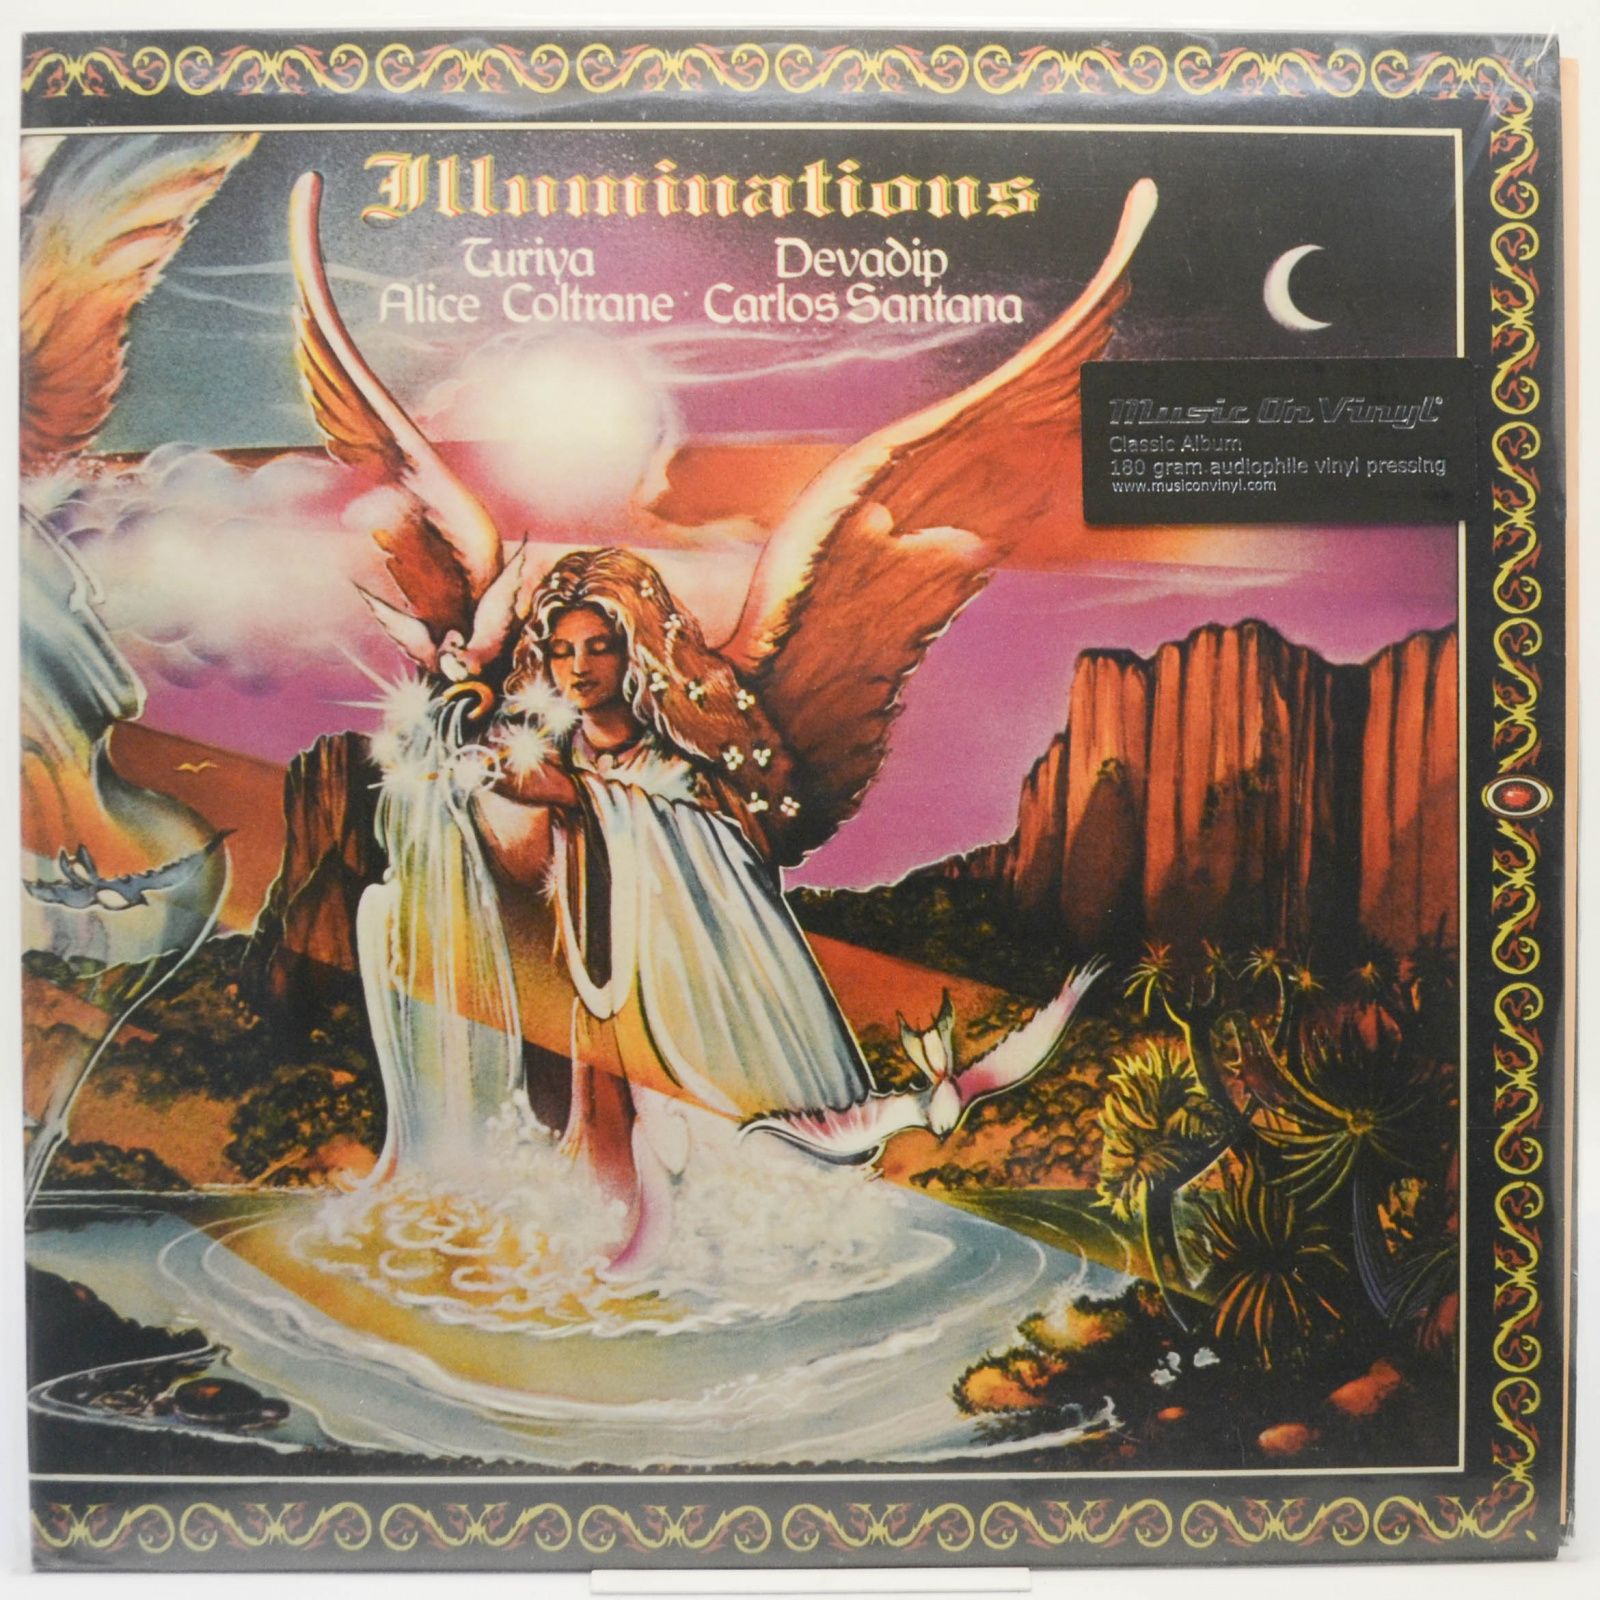 Devadip Carlos Santana & Turiya Alice Coltrane — Illuminations, 1974